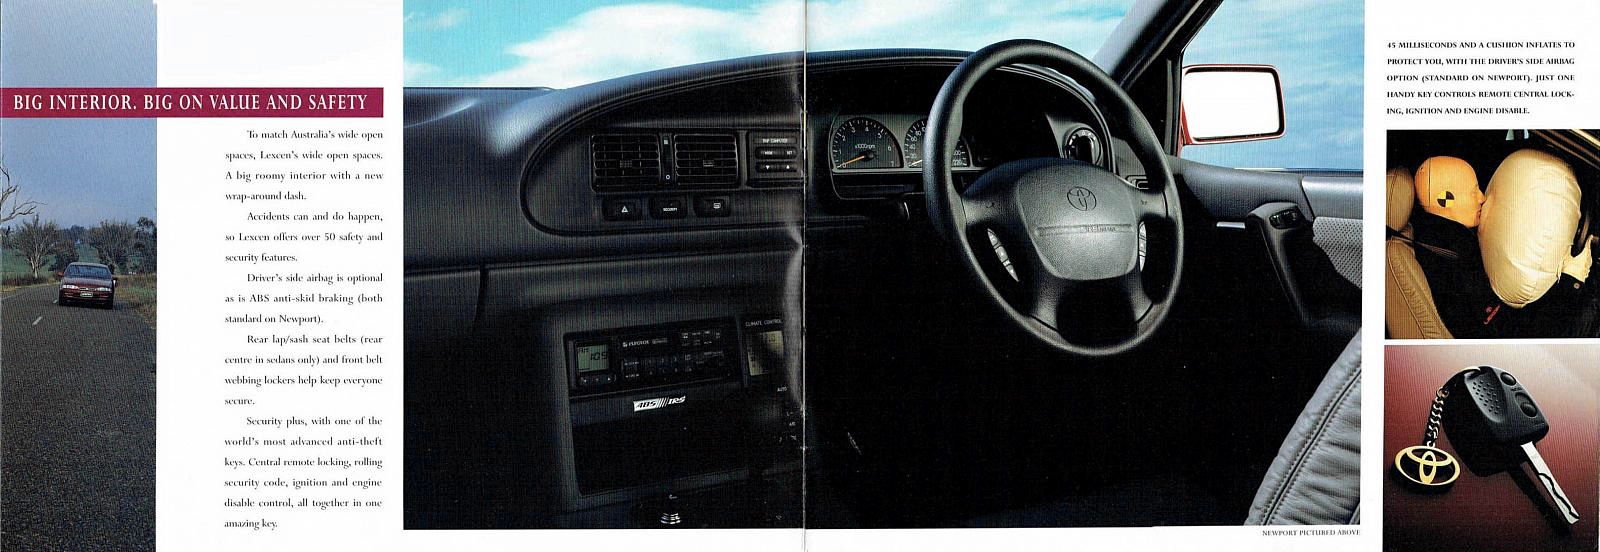 1994 Toyota Lexcen Brochure Page 1